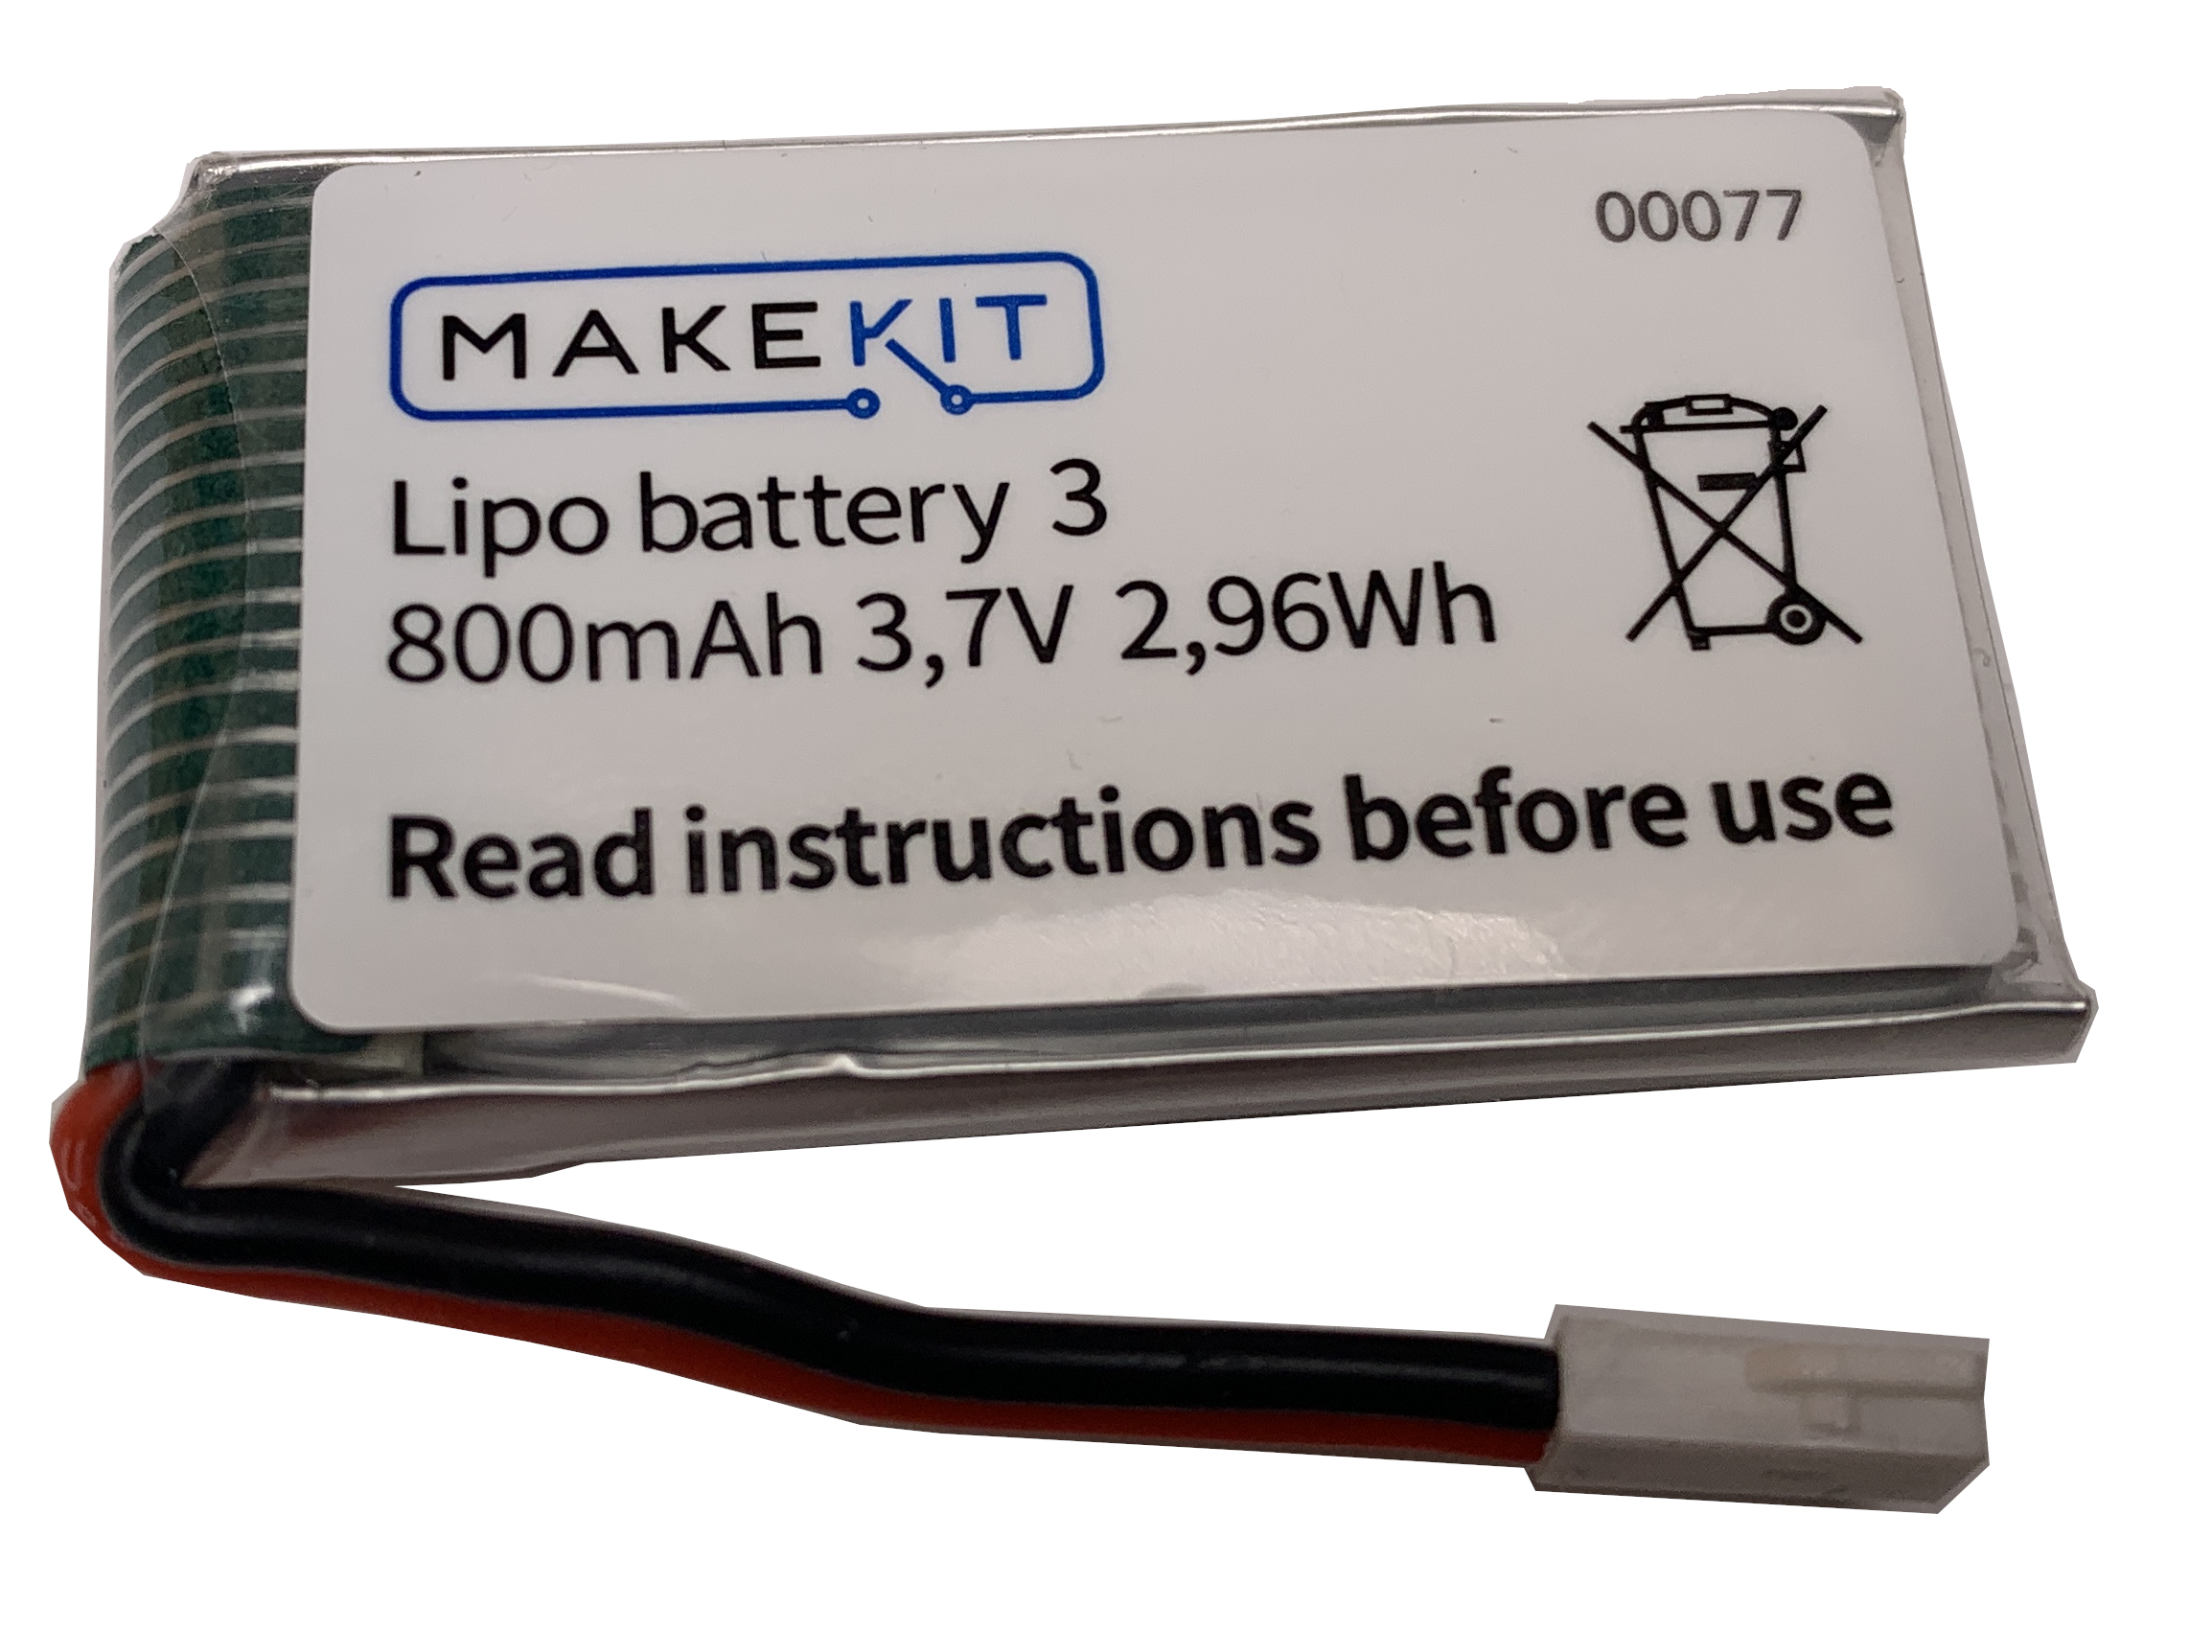 Battery 800MAh, 3,7V (Lipo battery 3)